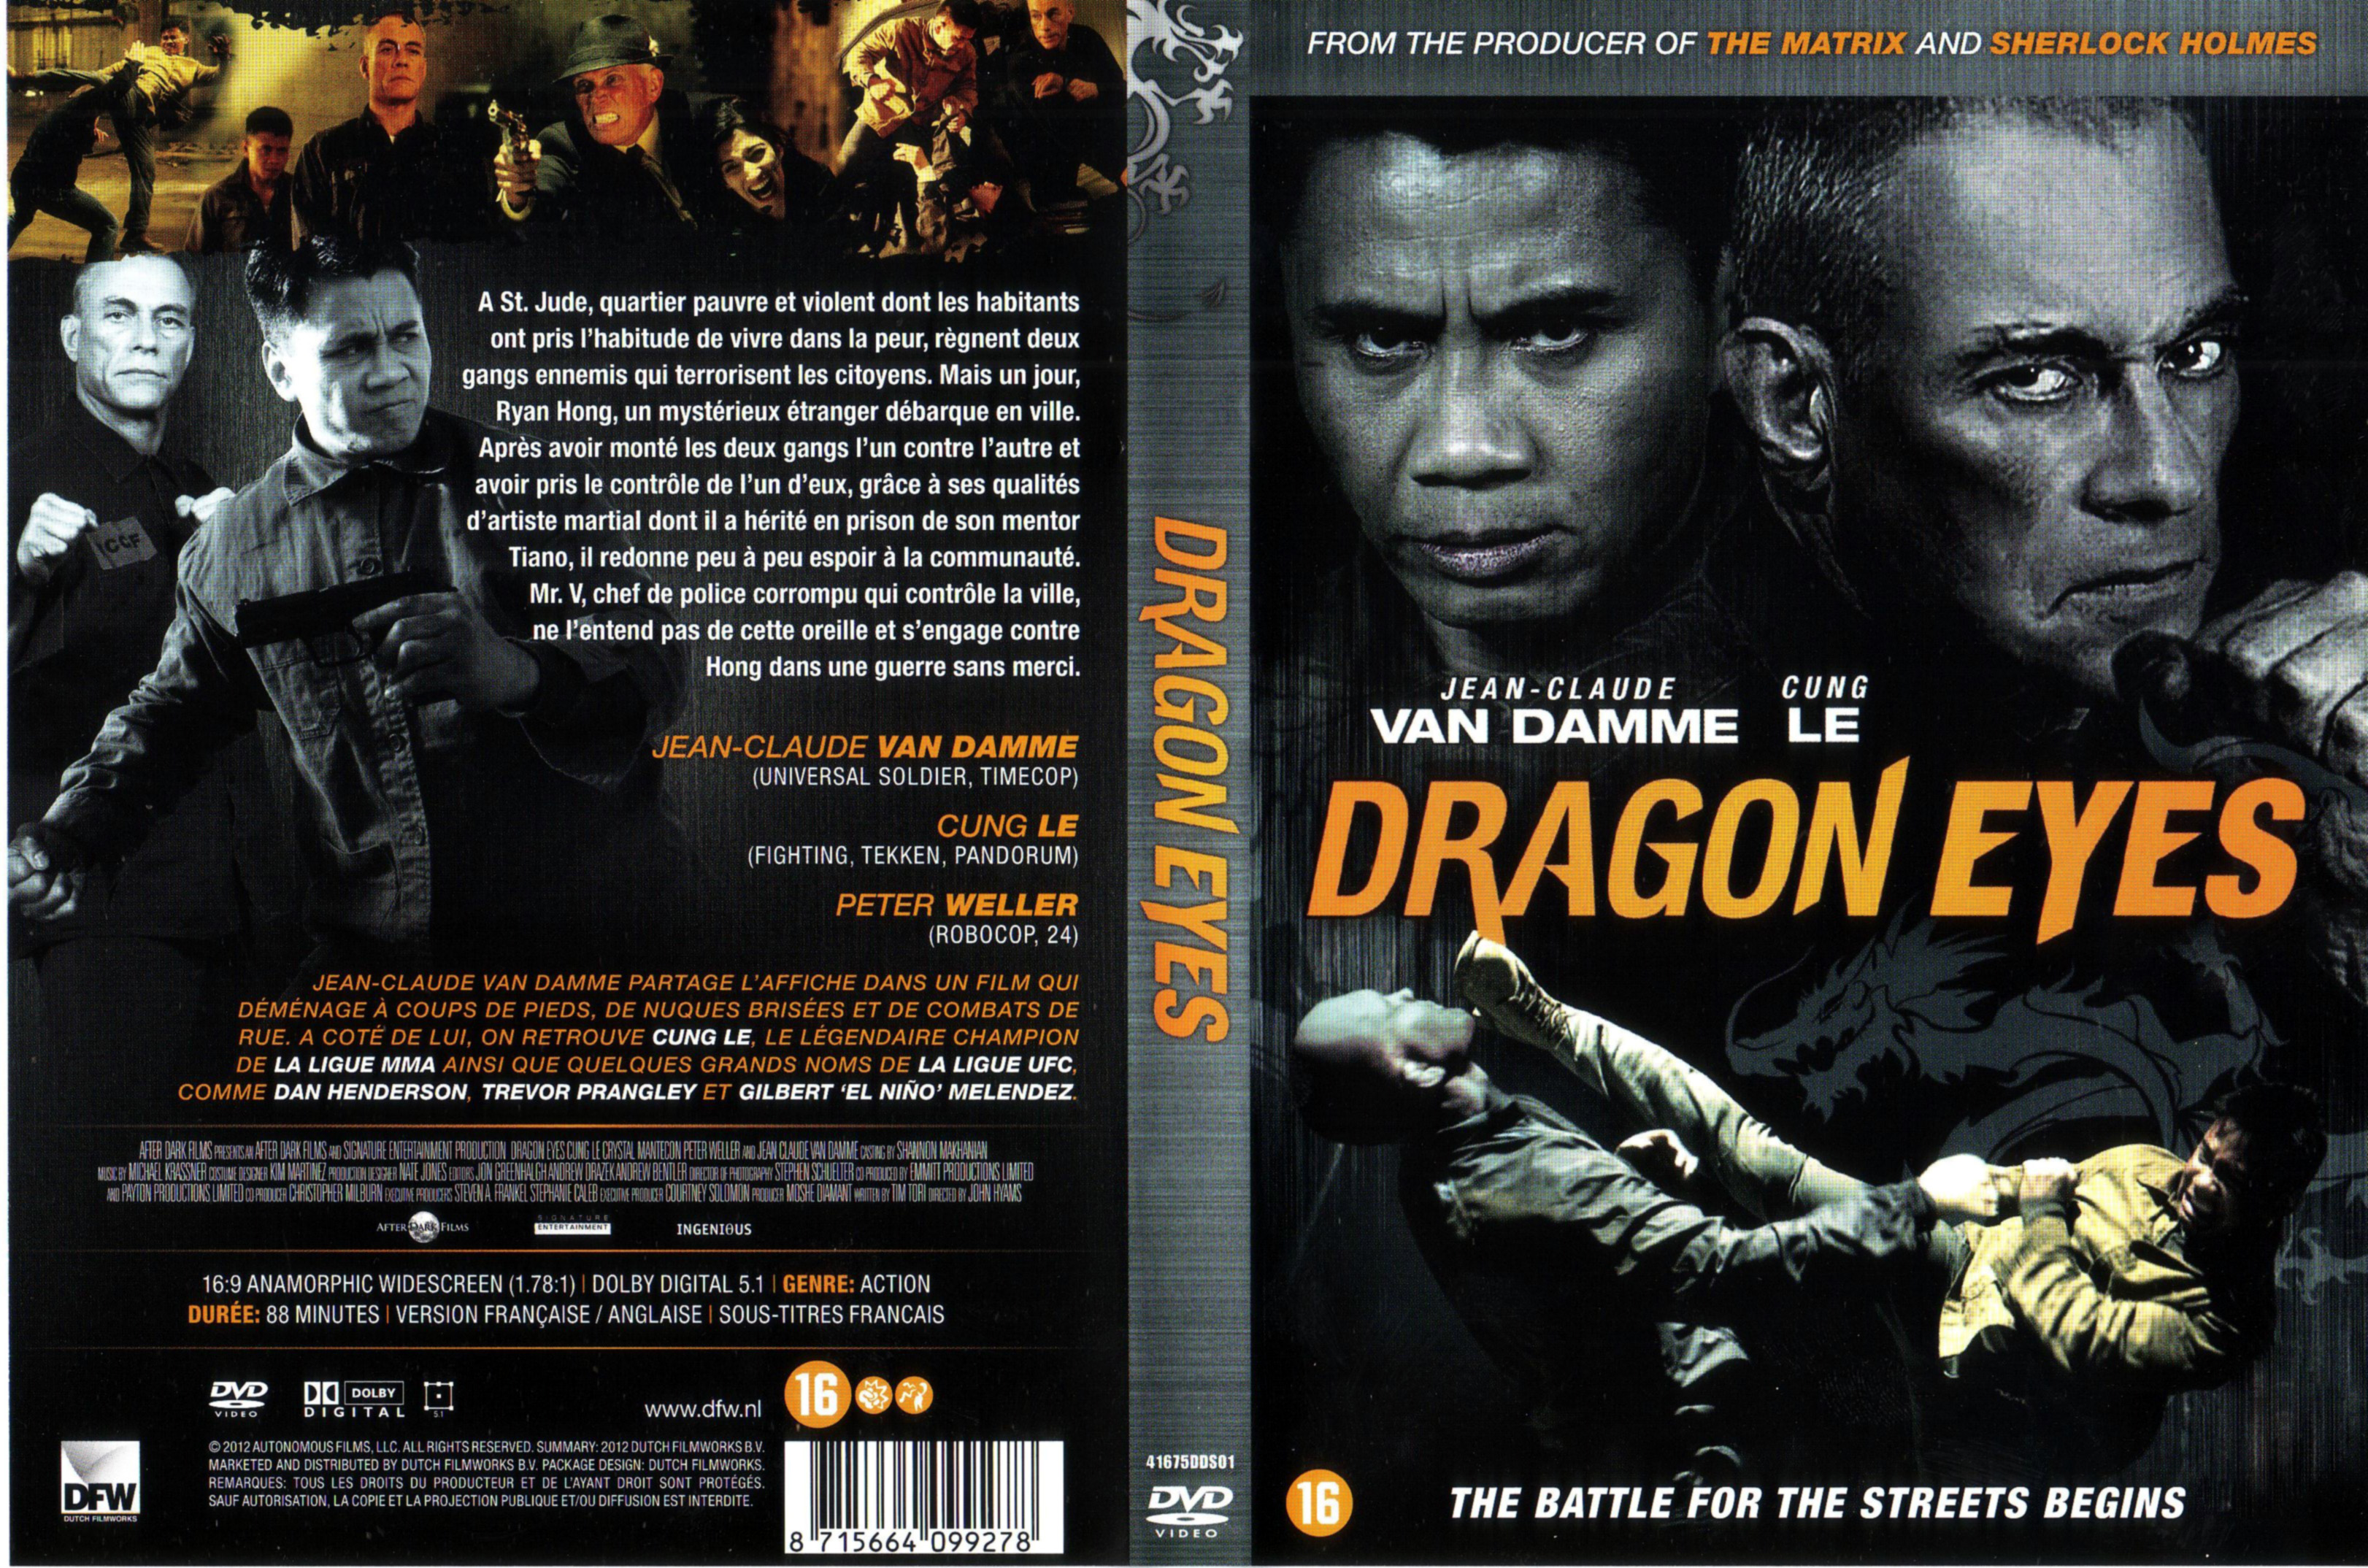 Jaquette DVD Dragon eyes